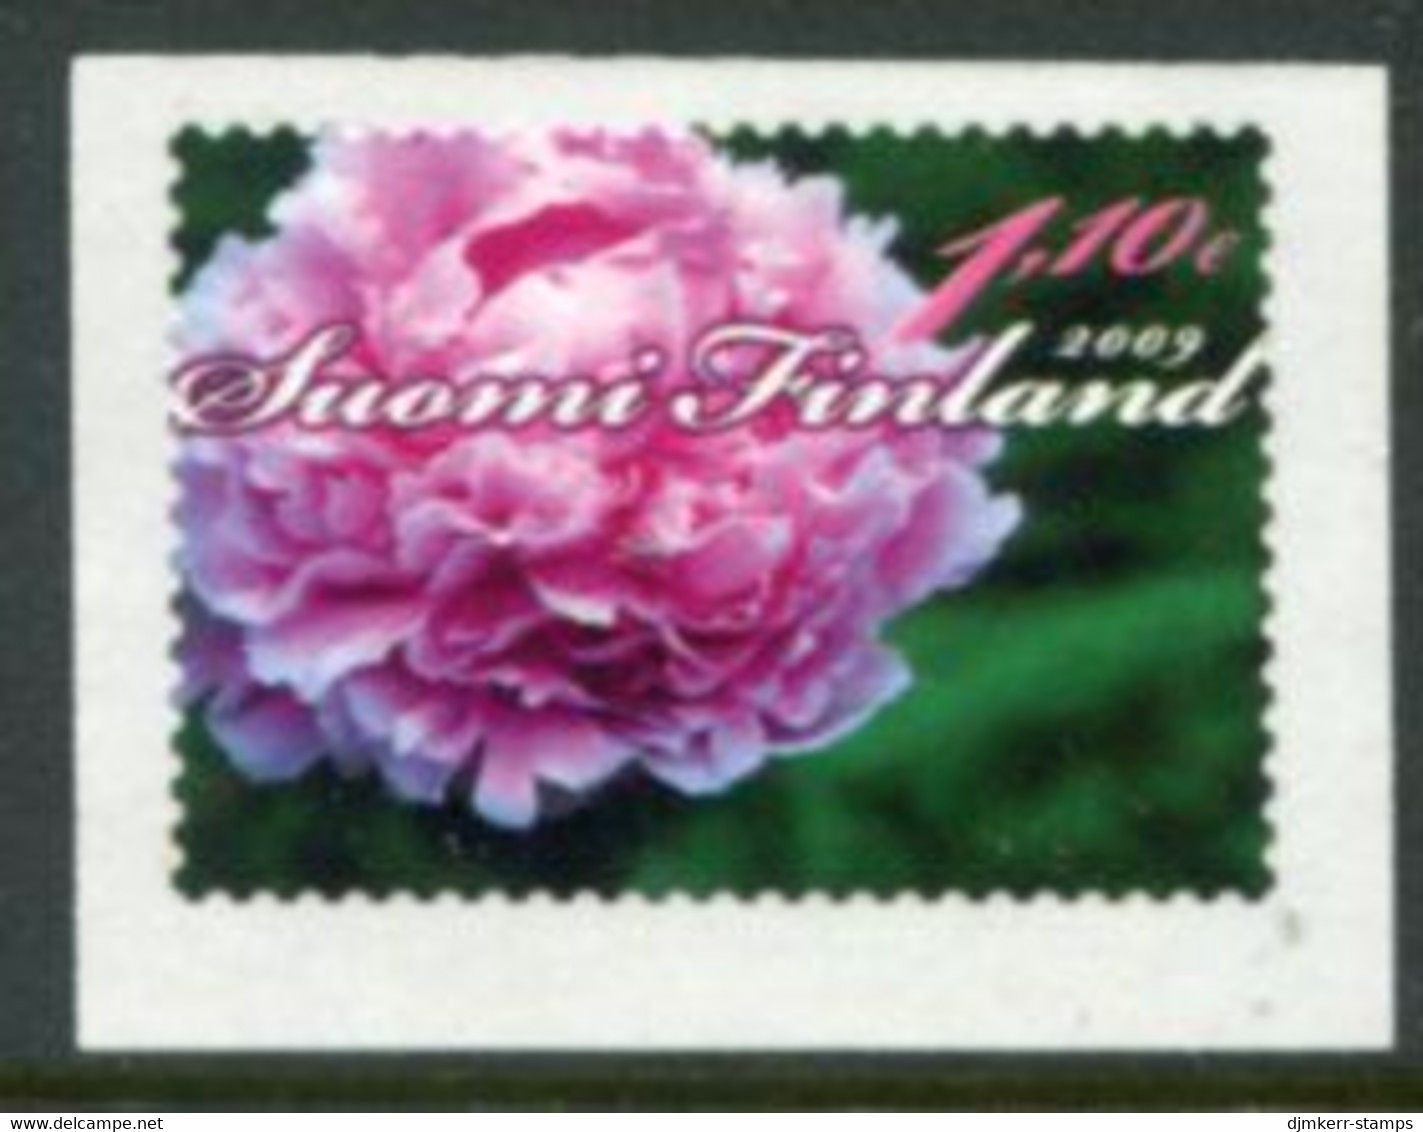 FINLAND 2009 Flower: Rose MNH / **.  Michel 1958 - Nuovi